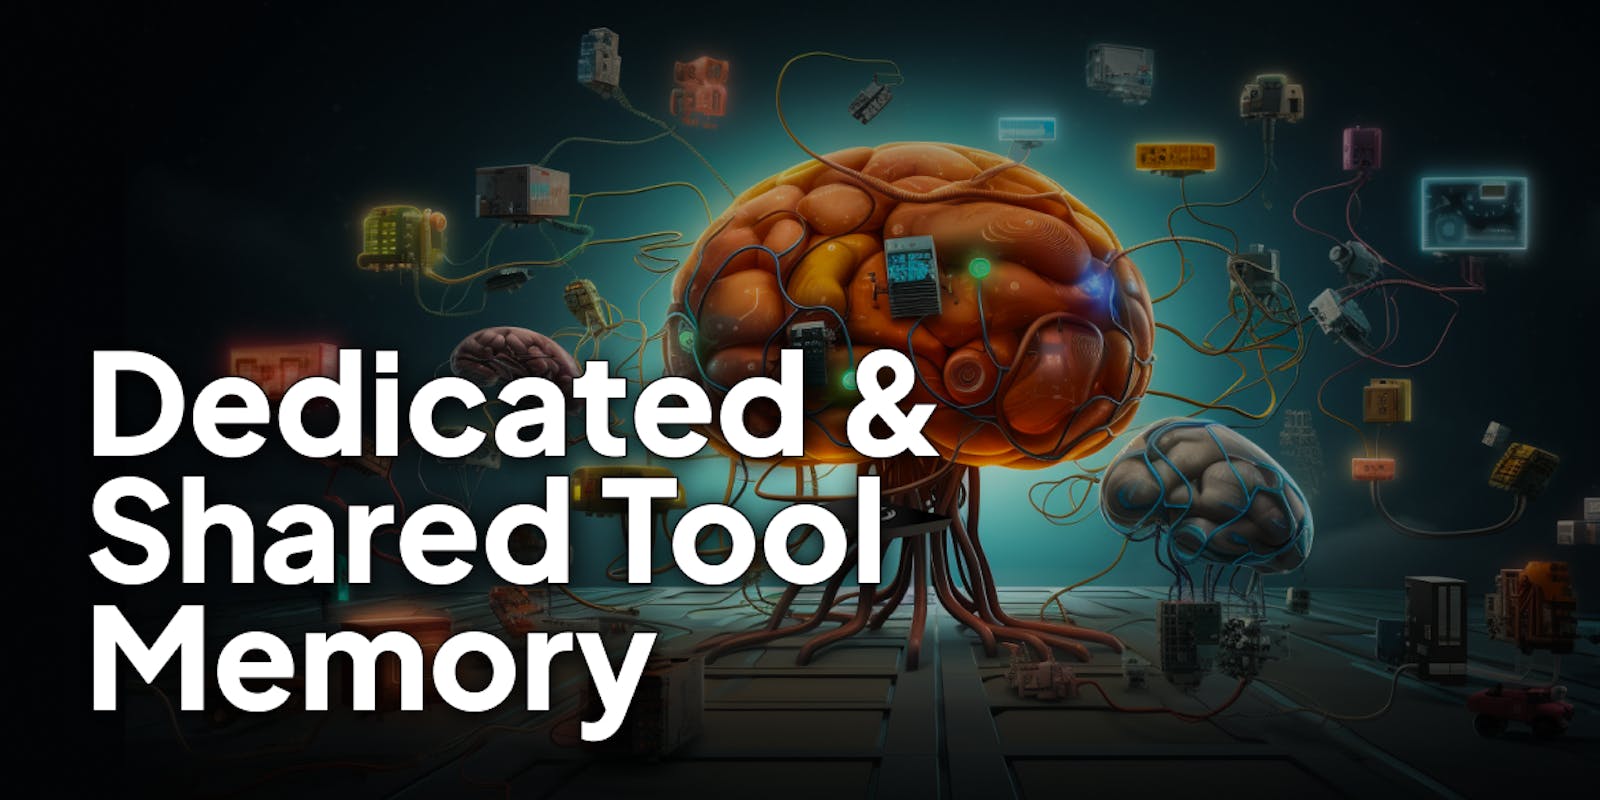 Understanding how dedicated & shared tool memory works in SuperAGI